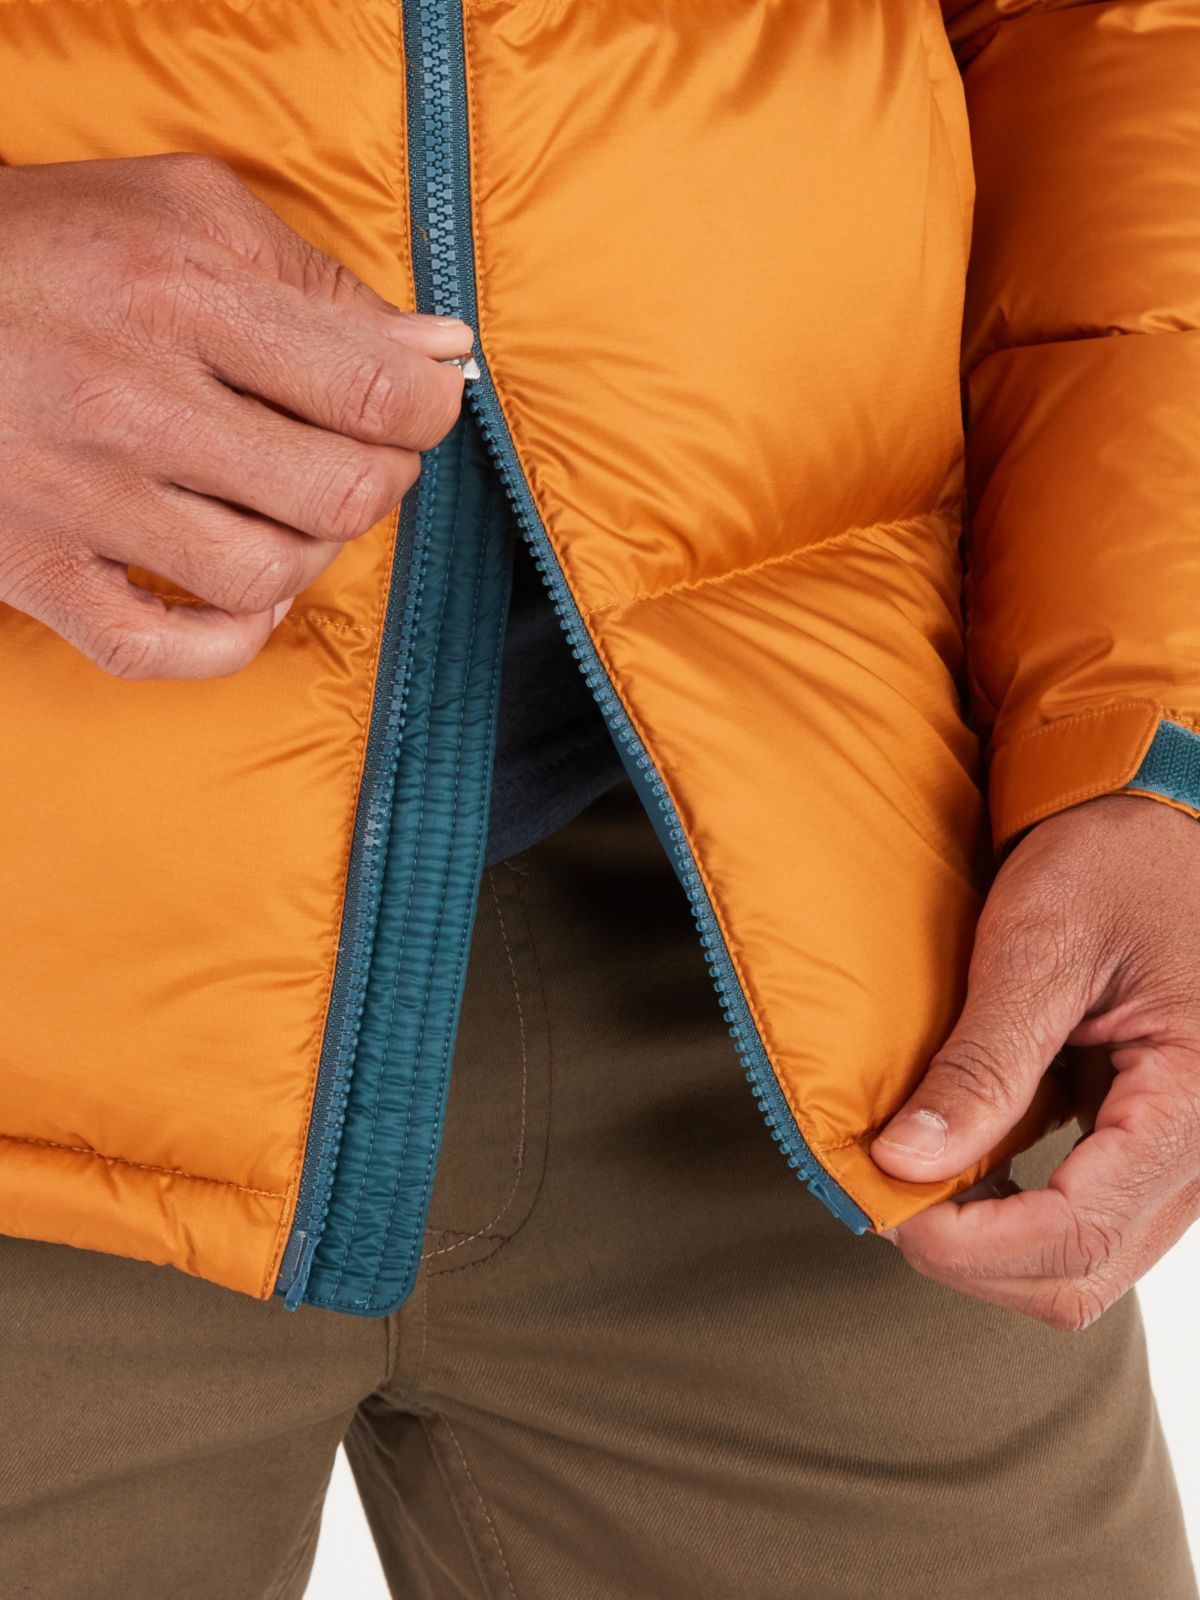 Closeup of zipper on jacket